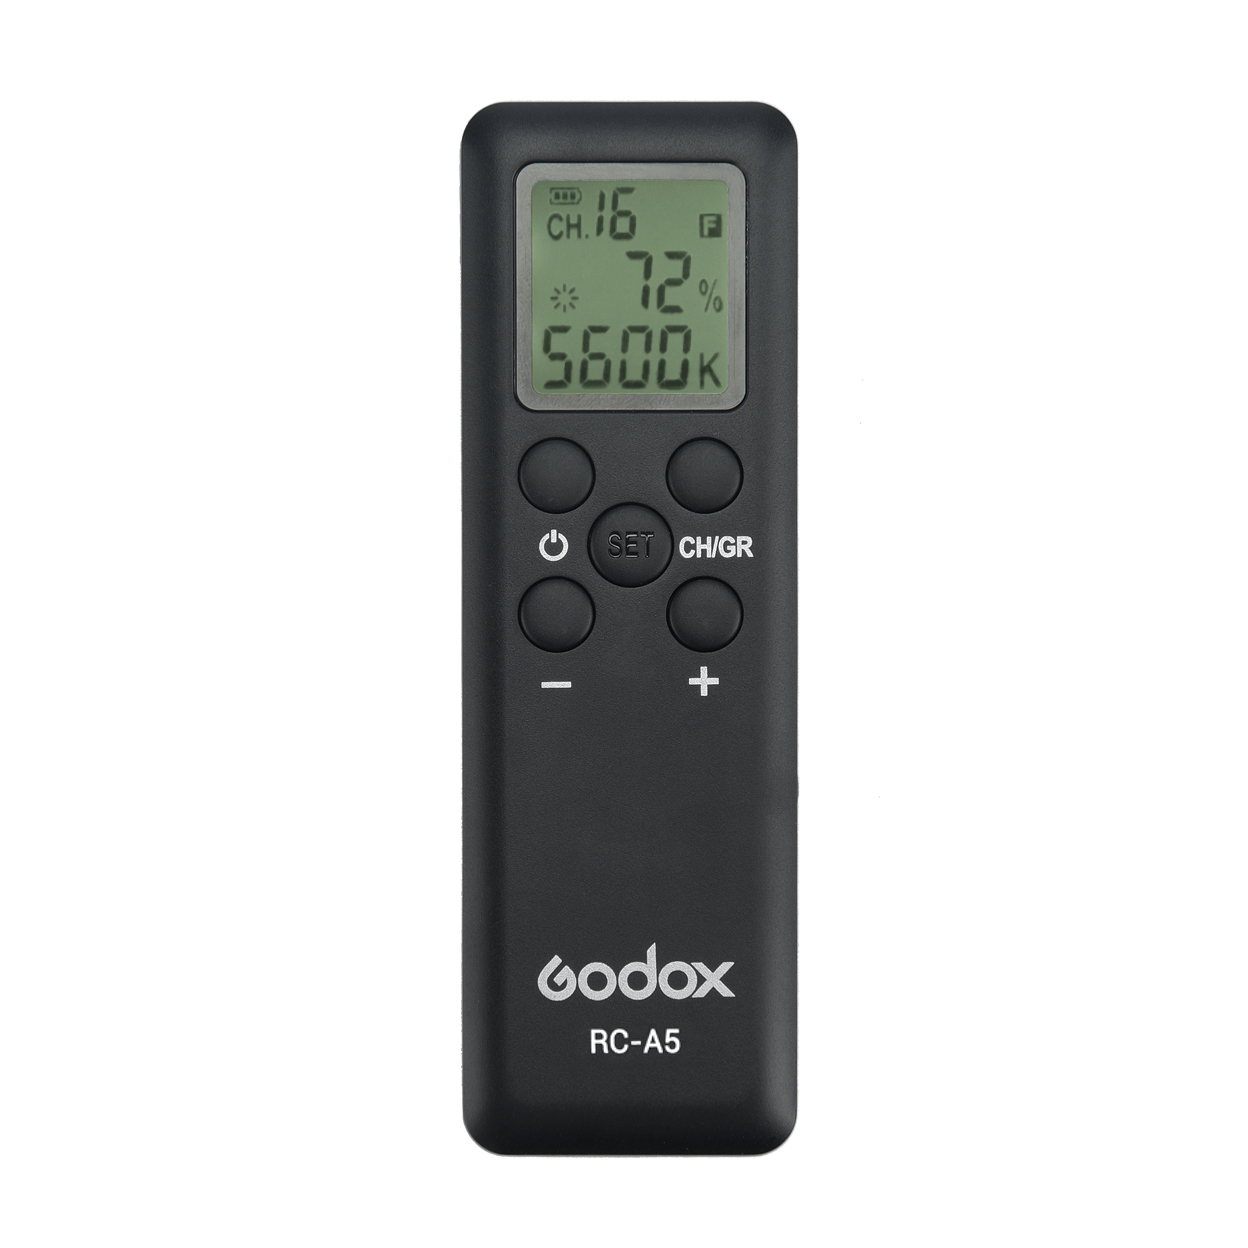 Пульт дистанционного управления Godox RC-A5 цена и фото